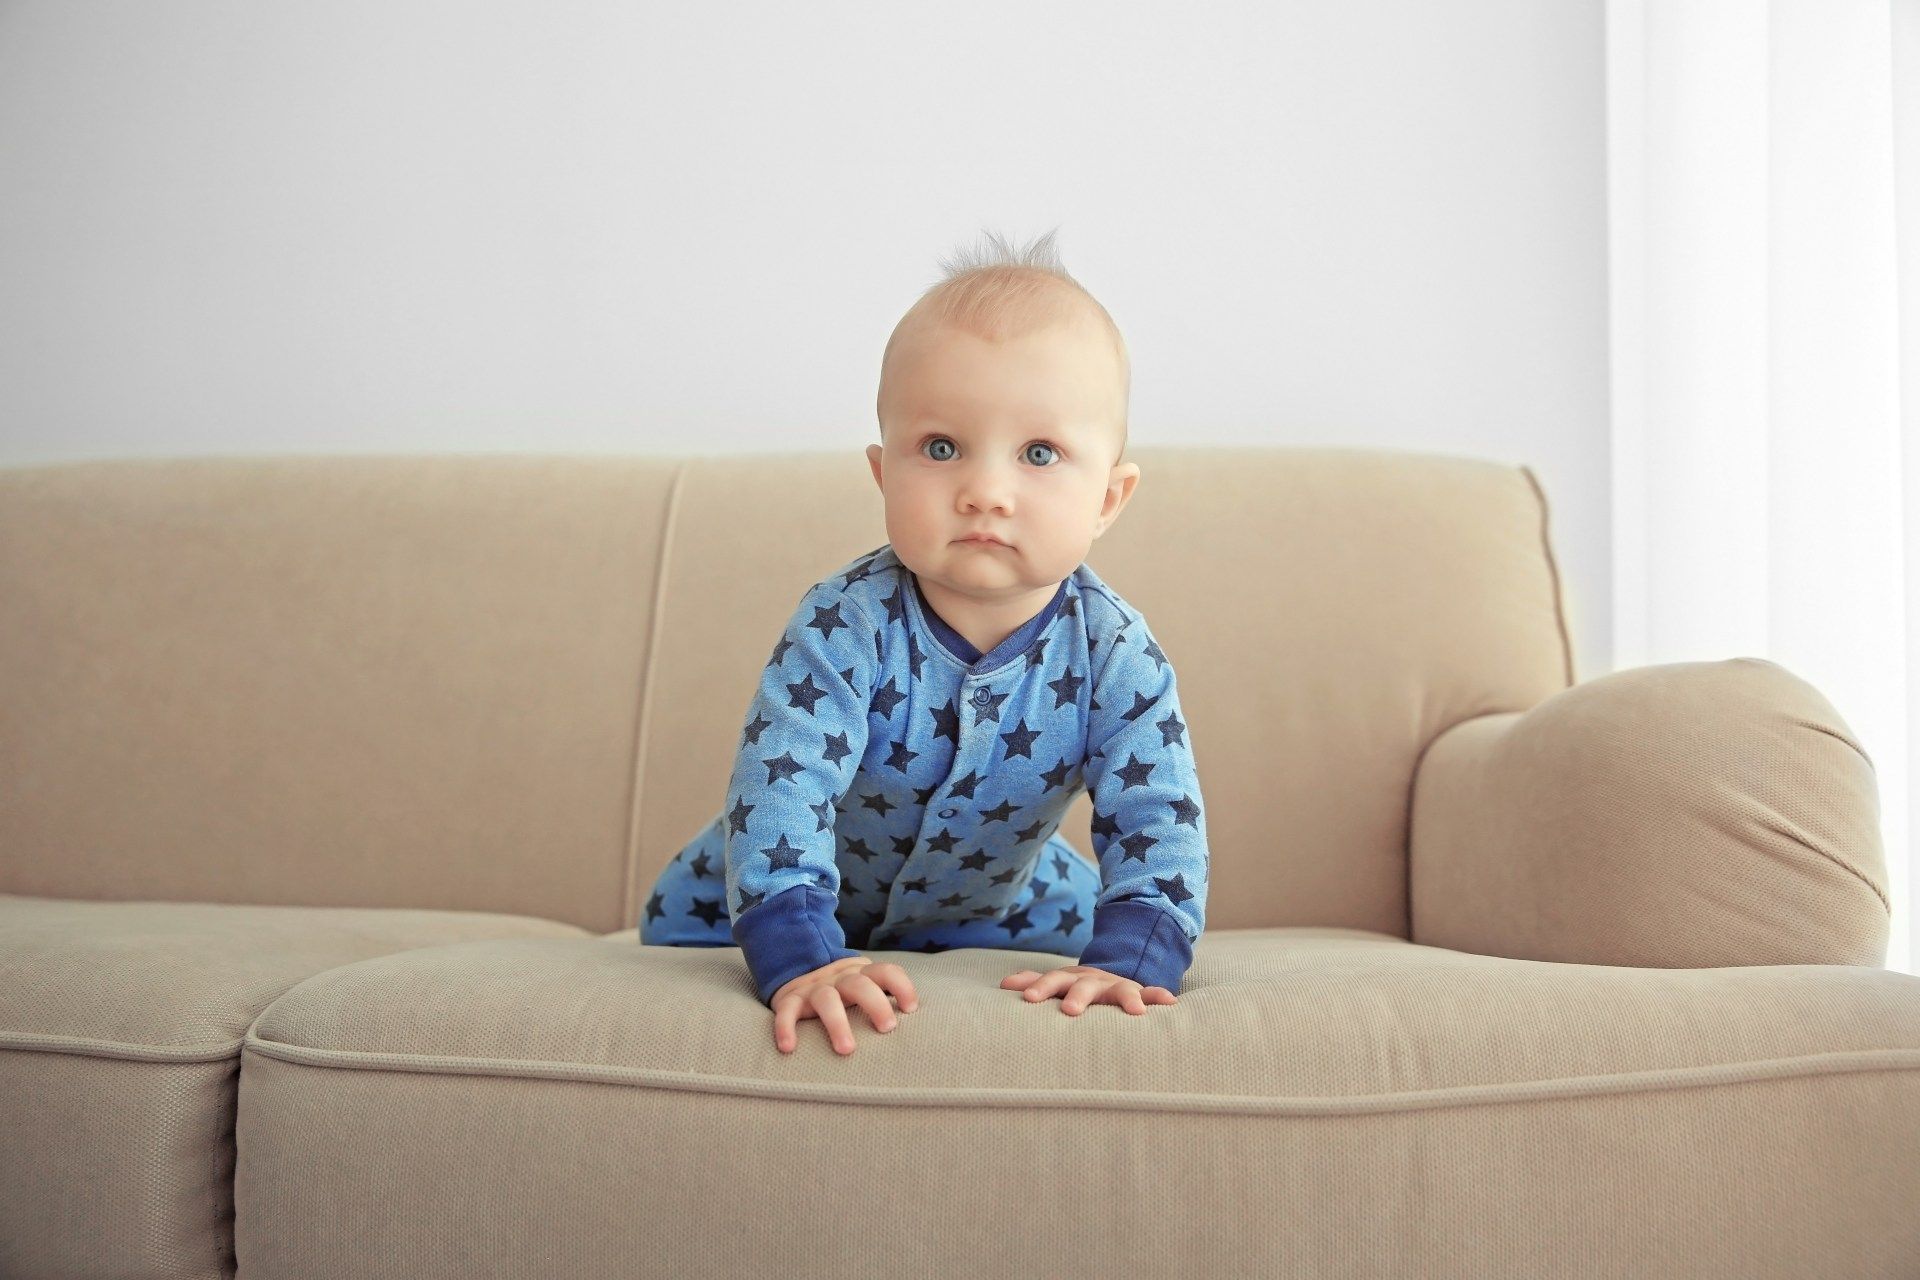 A baby wearing a blue romper crawls on a tan sofa - target recalls